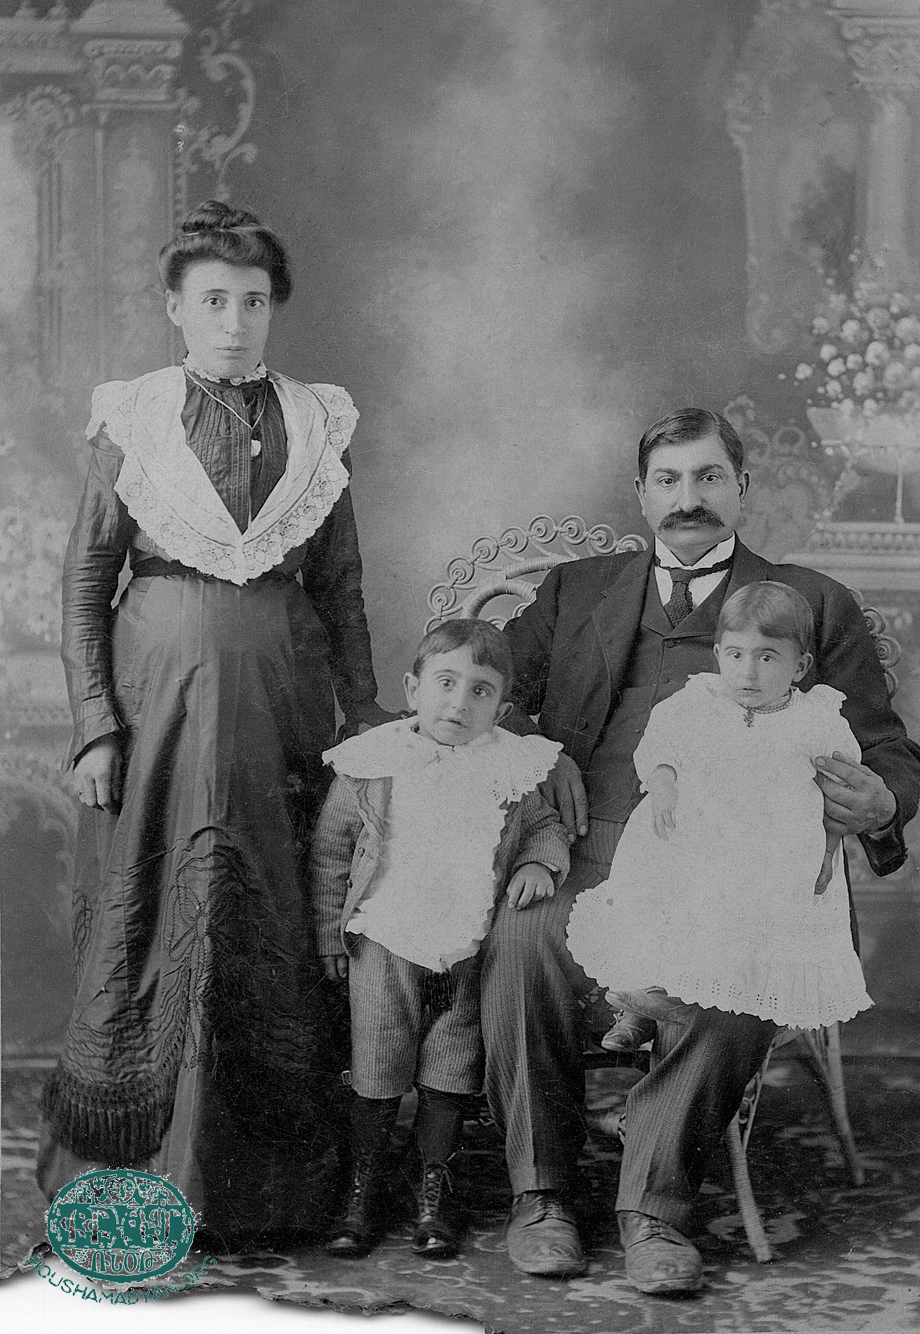 Fresno, January 1906: The Baghdasarian family. (From left): Varteni, Avedis, Zaruhi, Bagdasar